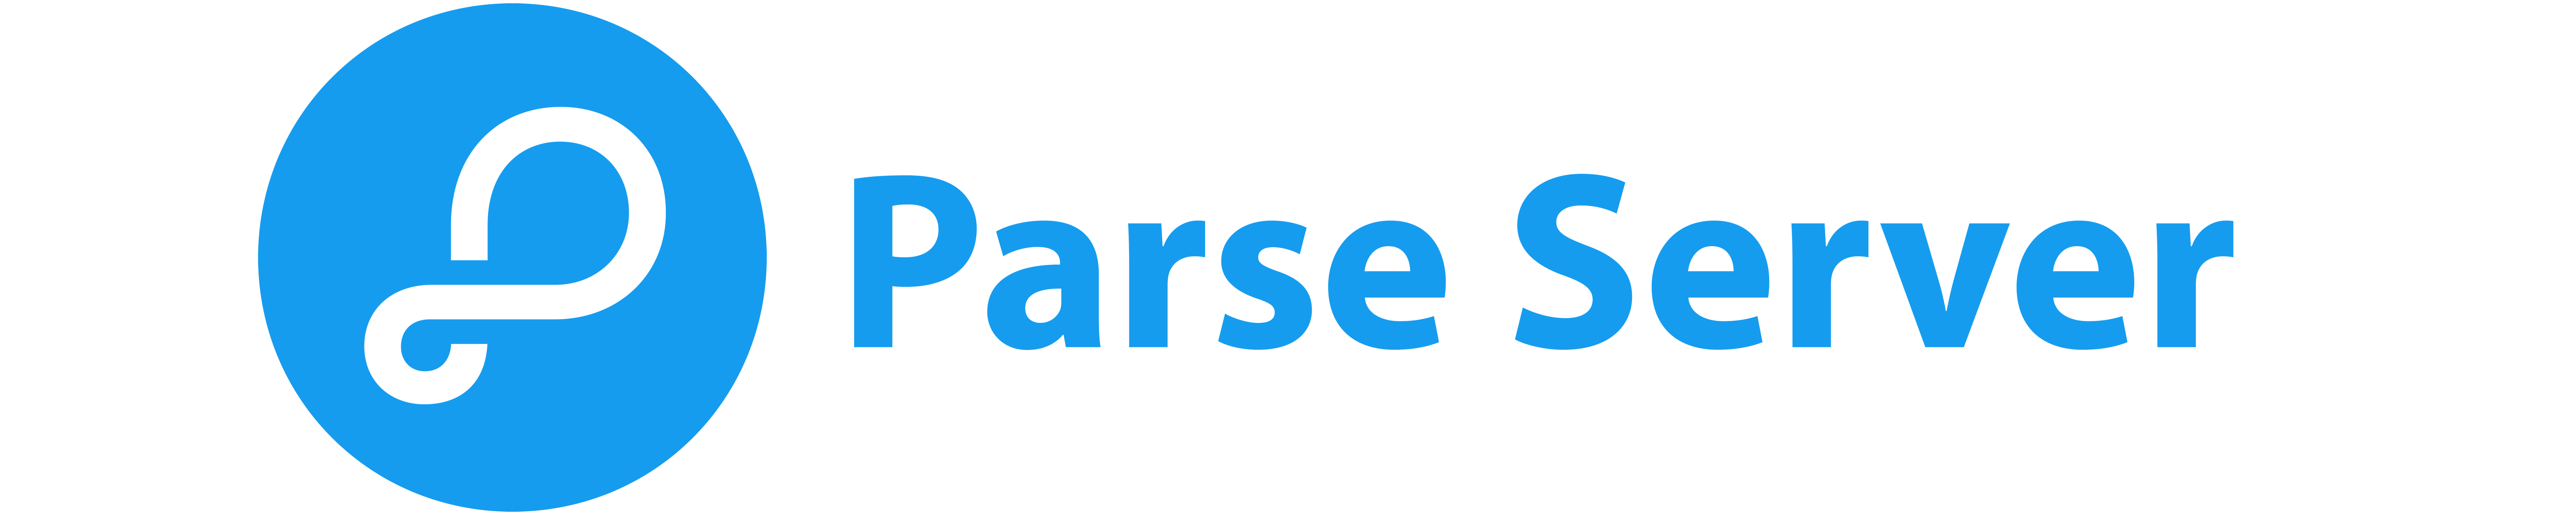 parse-repository-header-server